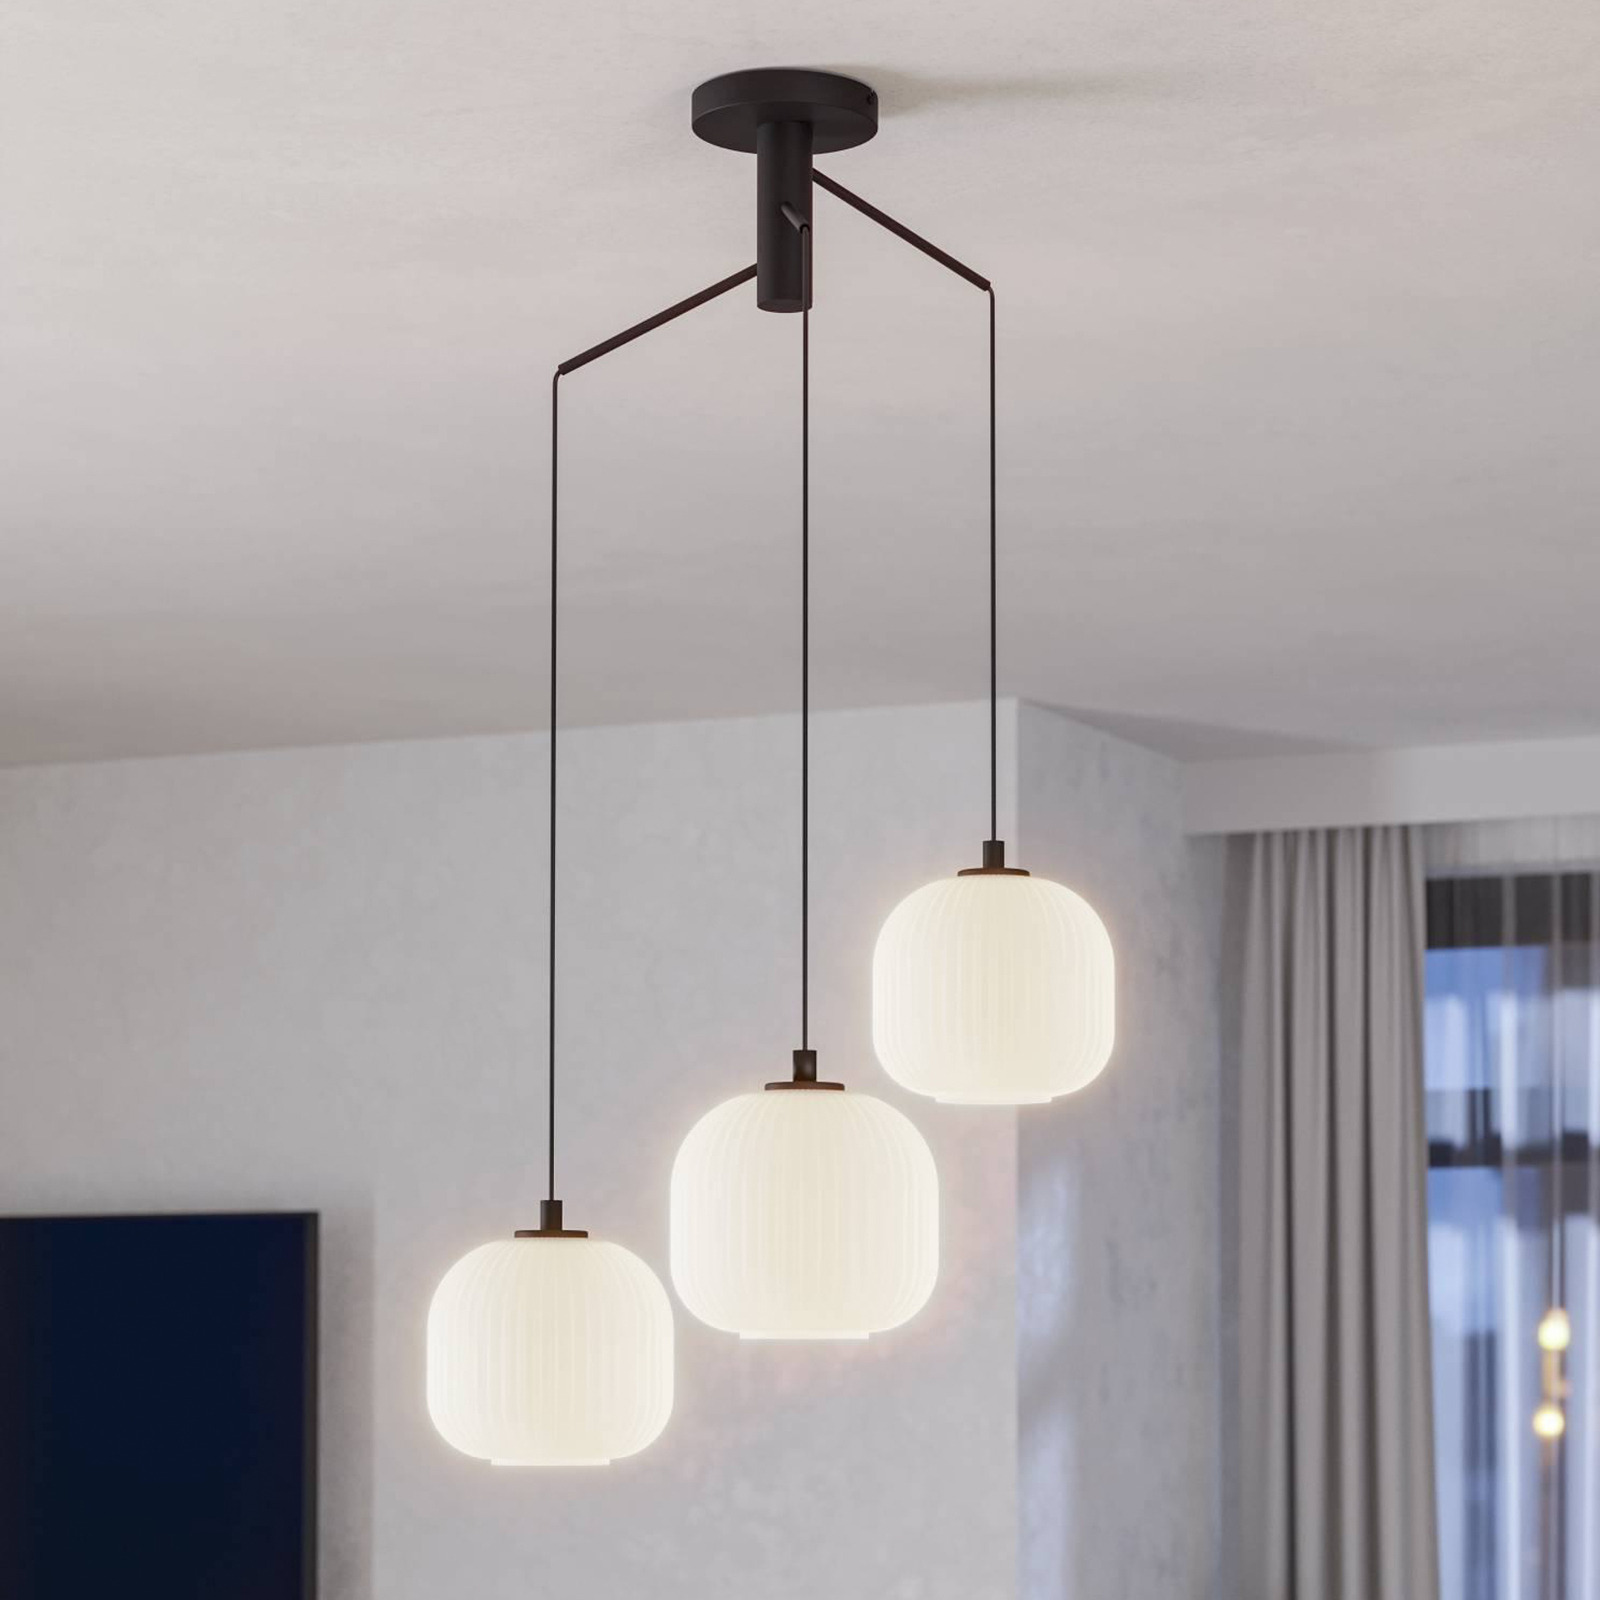 Mantunalle hanglamp, Ø 62 cm, zwart/wit, 3-lamps.